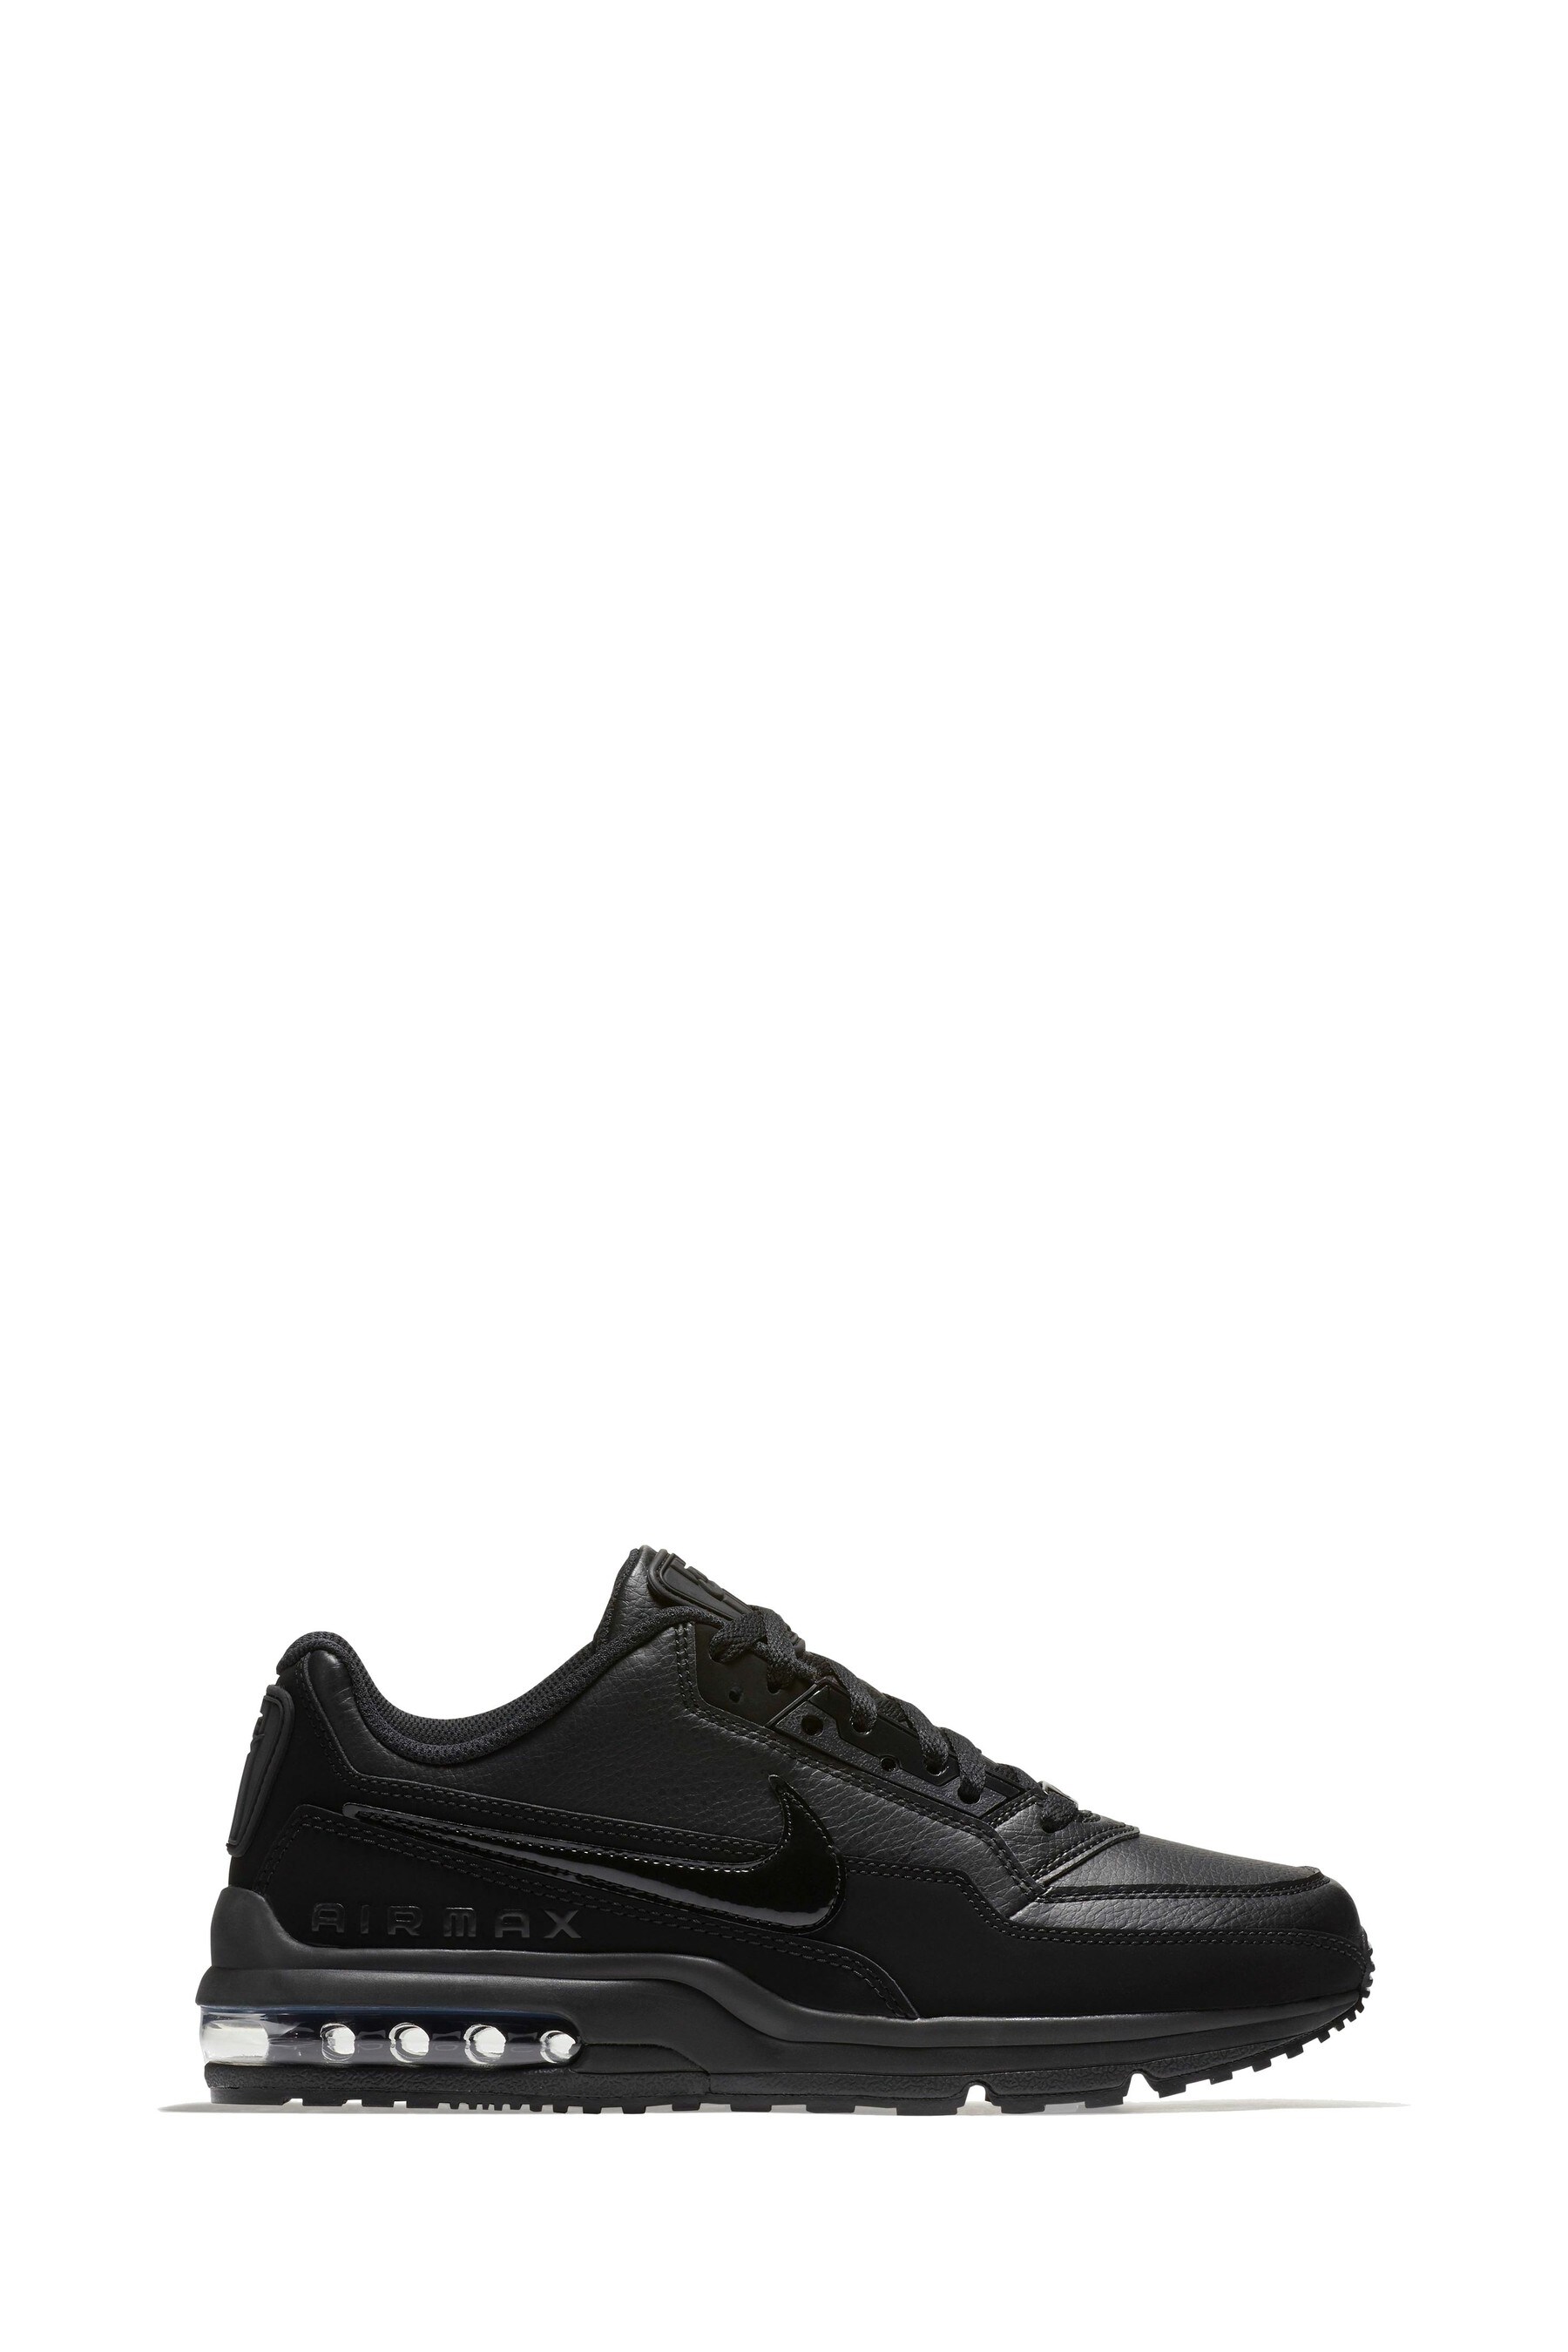 Спортивная обувь Air Max LTD 3 Nike, черный air max ltd 3